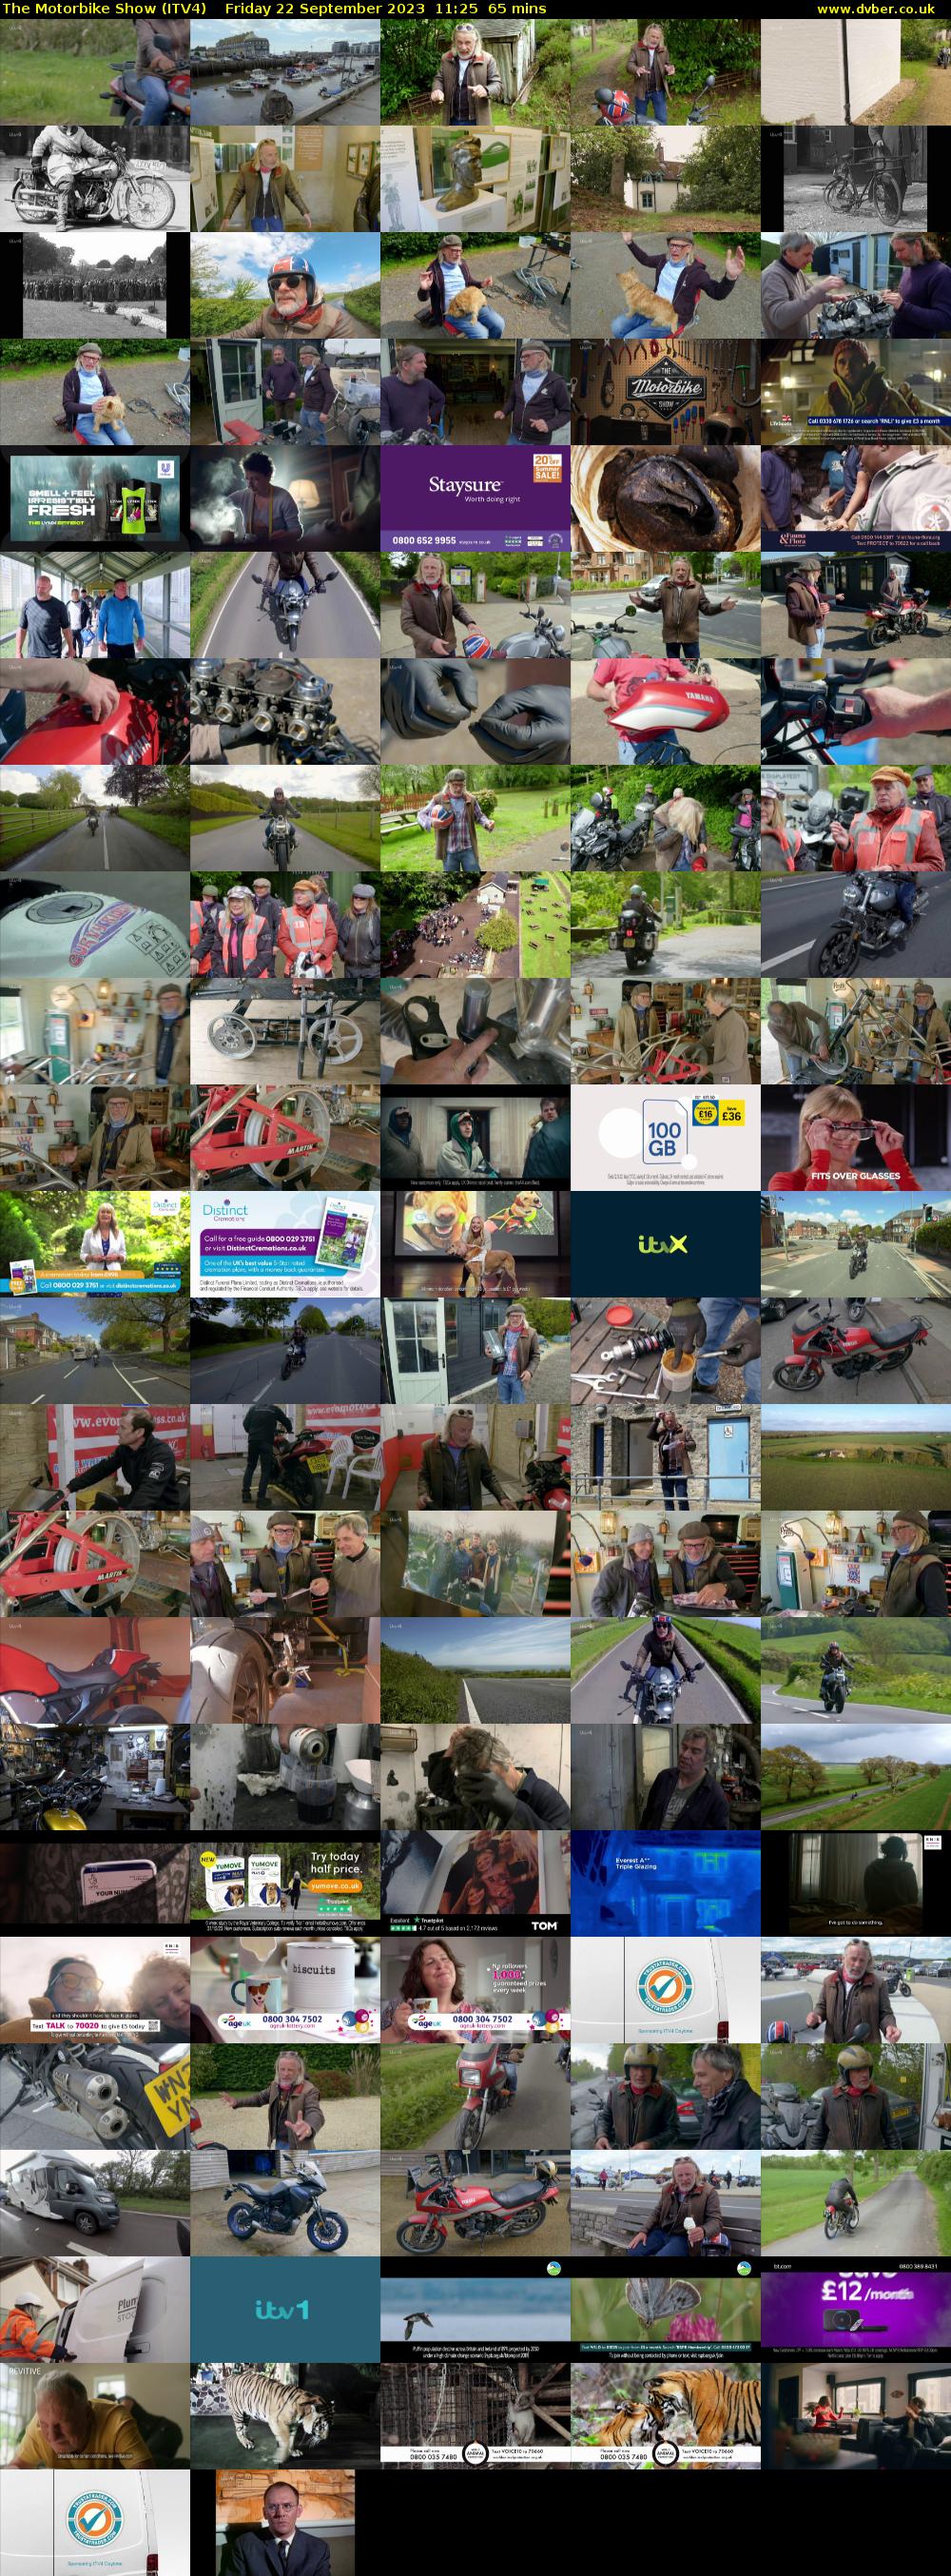 The Motorbike Show (ITV4) Friday 22 September 2023 11:25 - 12:30